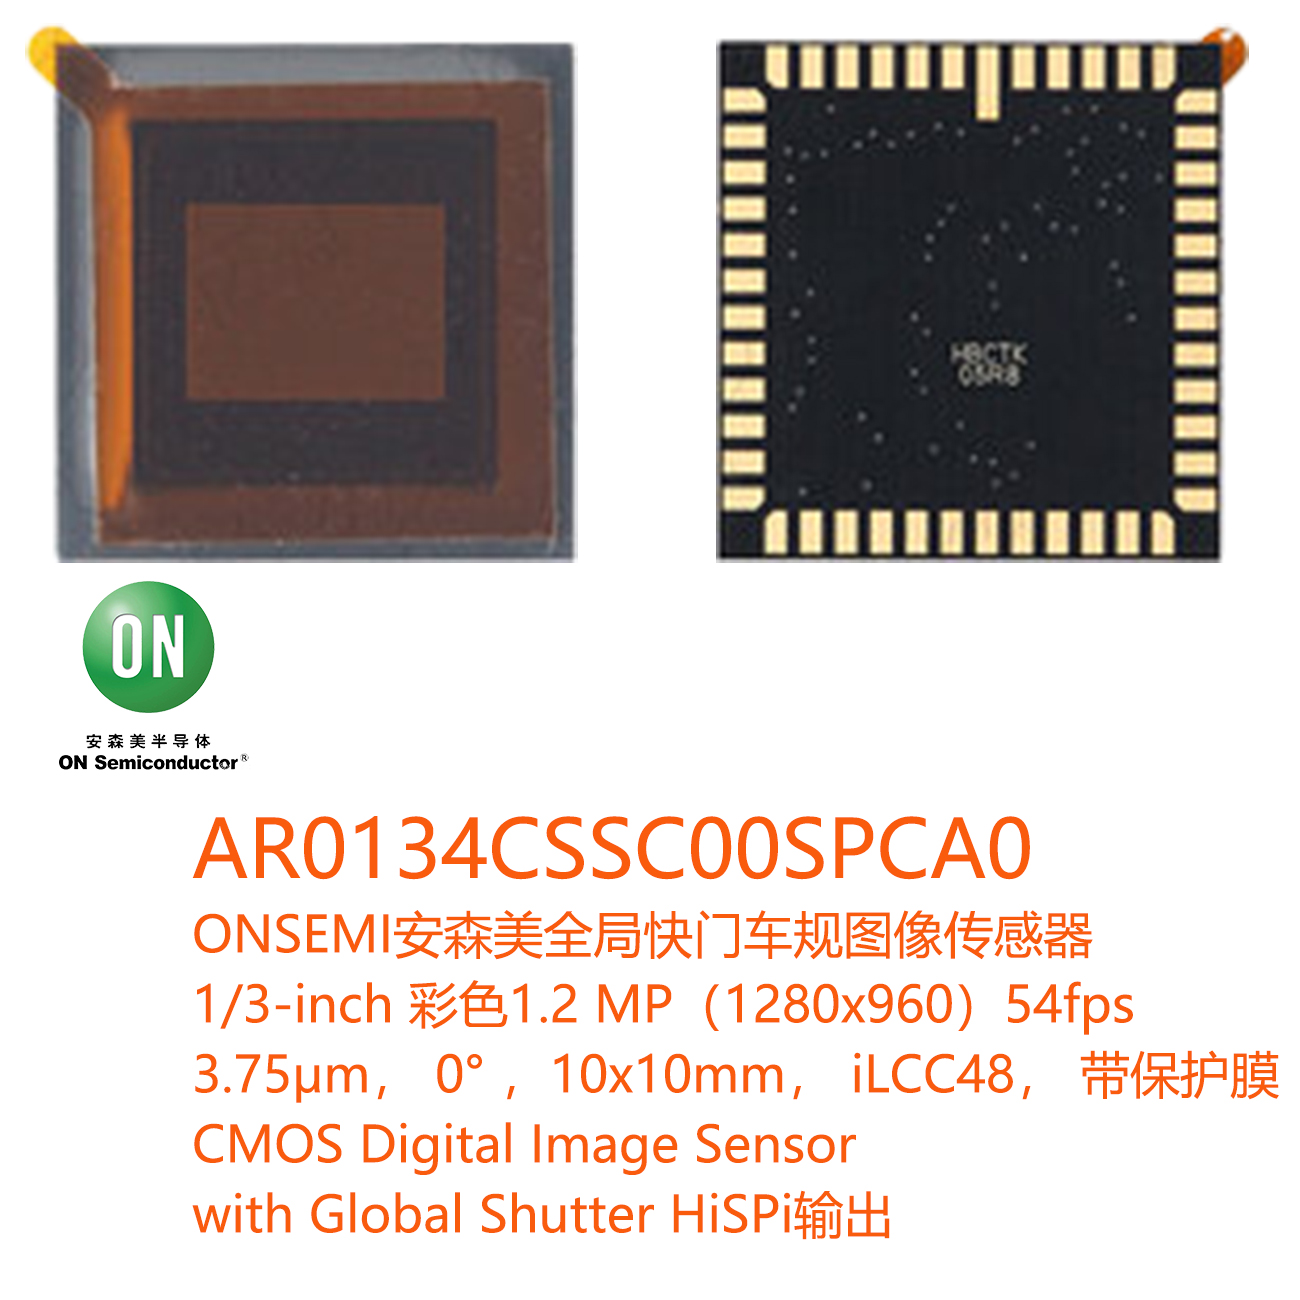 AR0134CSSC00SPCA0，AR0134彩色， ONSEMI安森美车规芯片，全局快门车规图像传感器，安森美扫描仪专用图像传感器芯片，120万像素(1.2MP)高清扫描仪用cmos, Scanner dedicated image sensor, 1/3-inch 彩色1.2 MP（1280x960），高帧率54fps ，3.75μm晶像元， 0°汽车图像传感器， 10x10mm， iLCC48 带保护膜CMOS， Digital Image Sensor， with Global Shutter sensor，HiSPi输出,